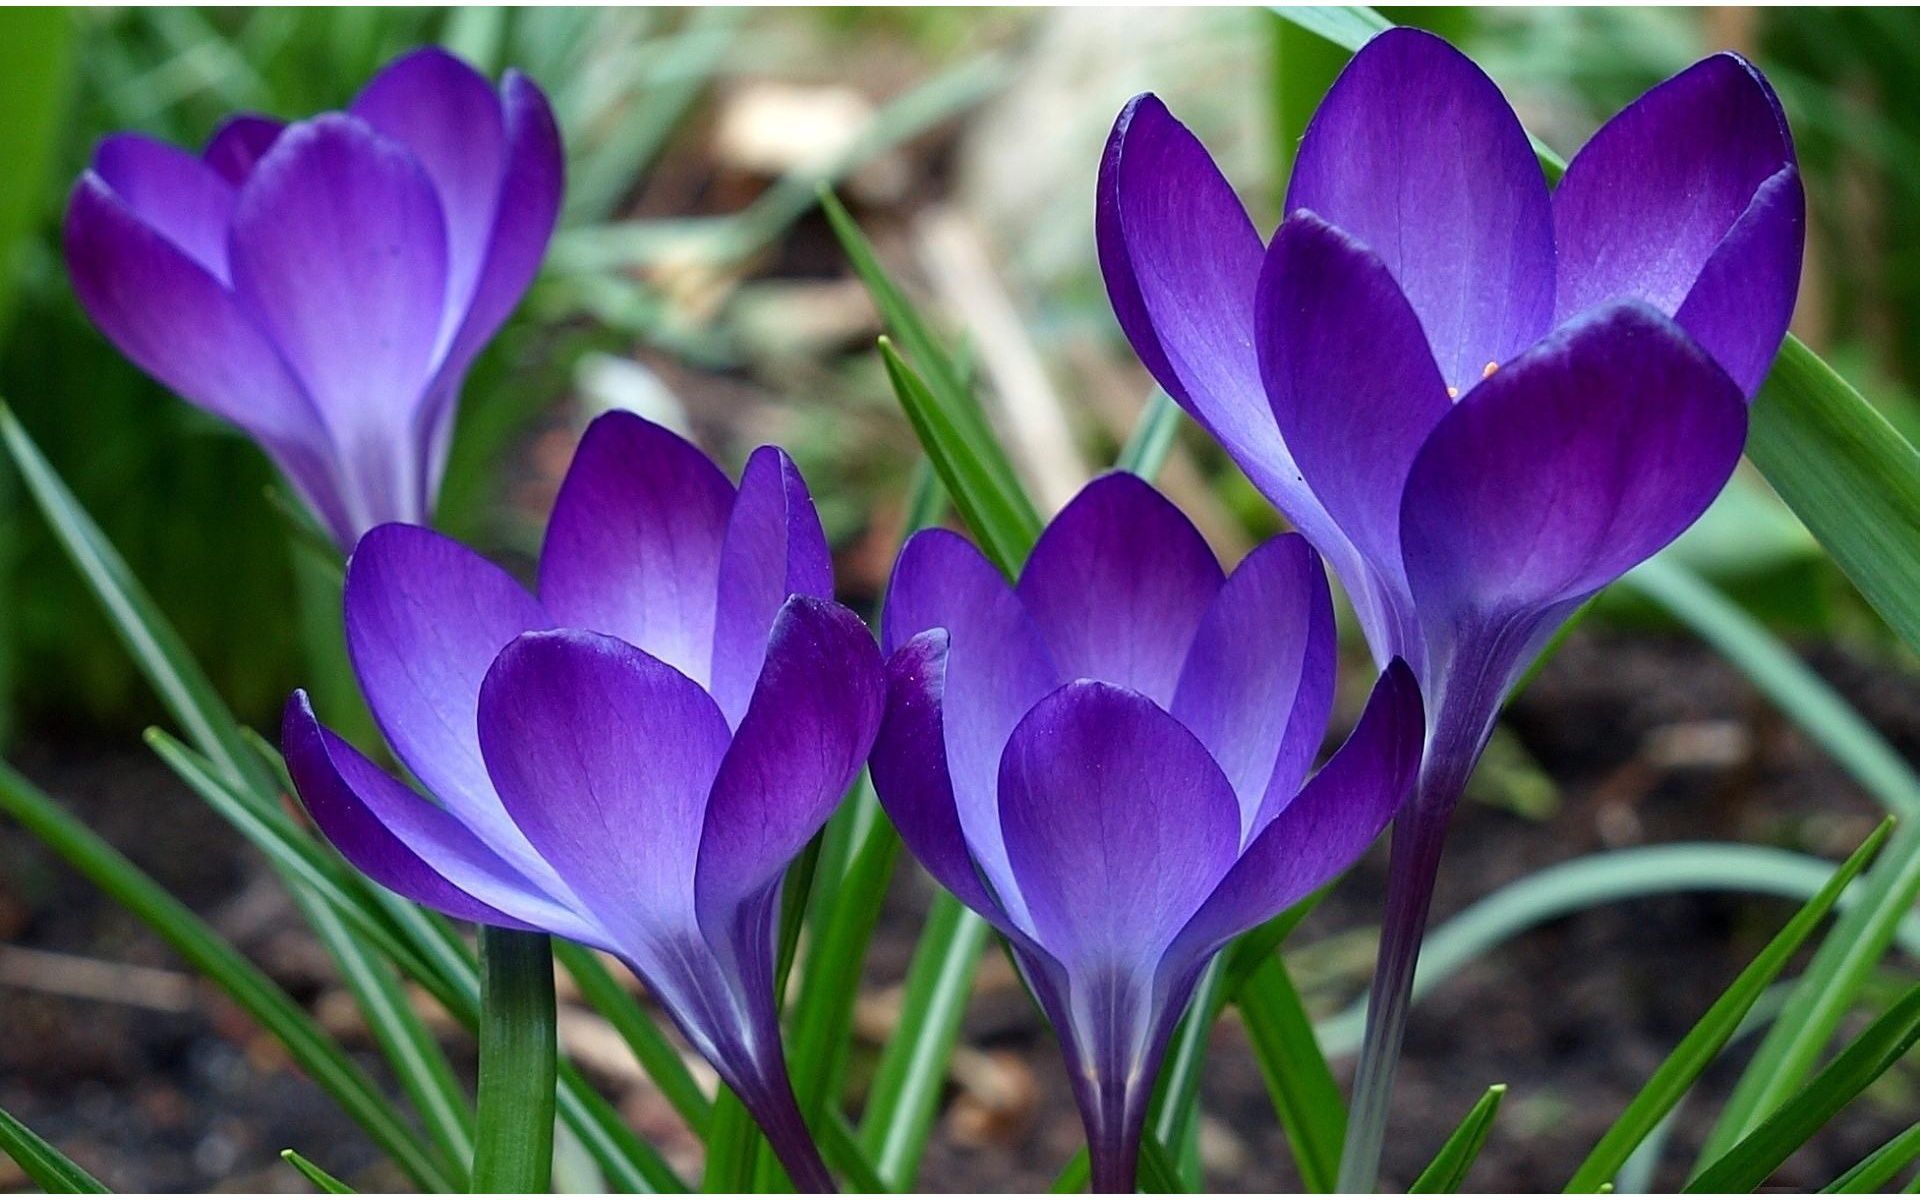 violets. Violets In The Garden x 1200. Download. Close